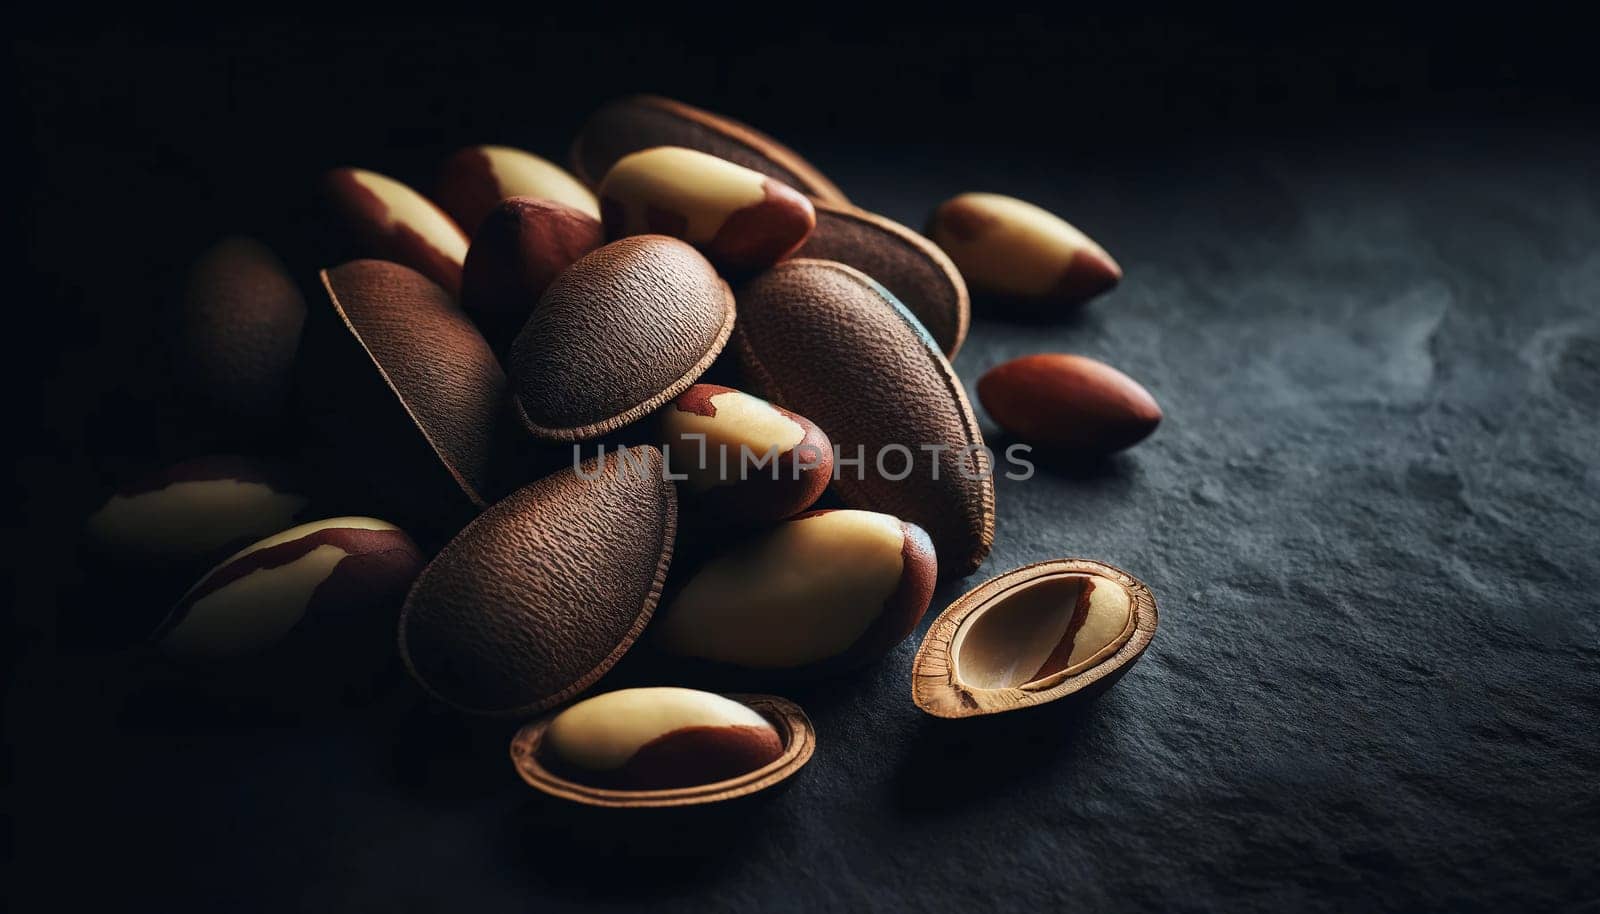 Brazil nut close up on black background by Annado